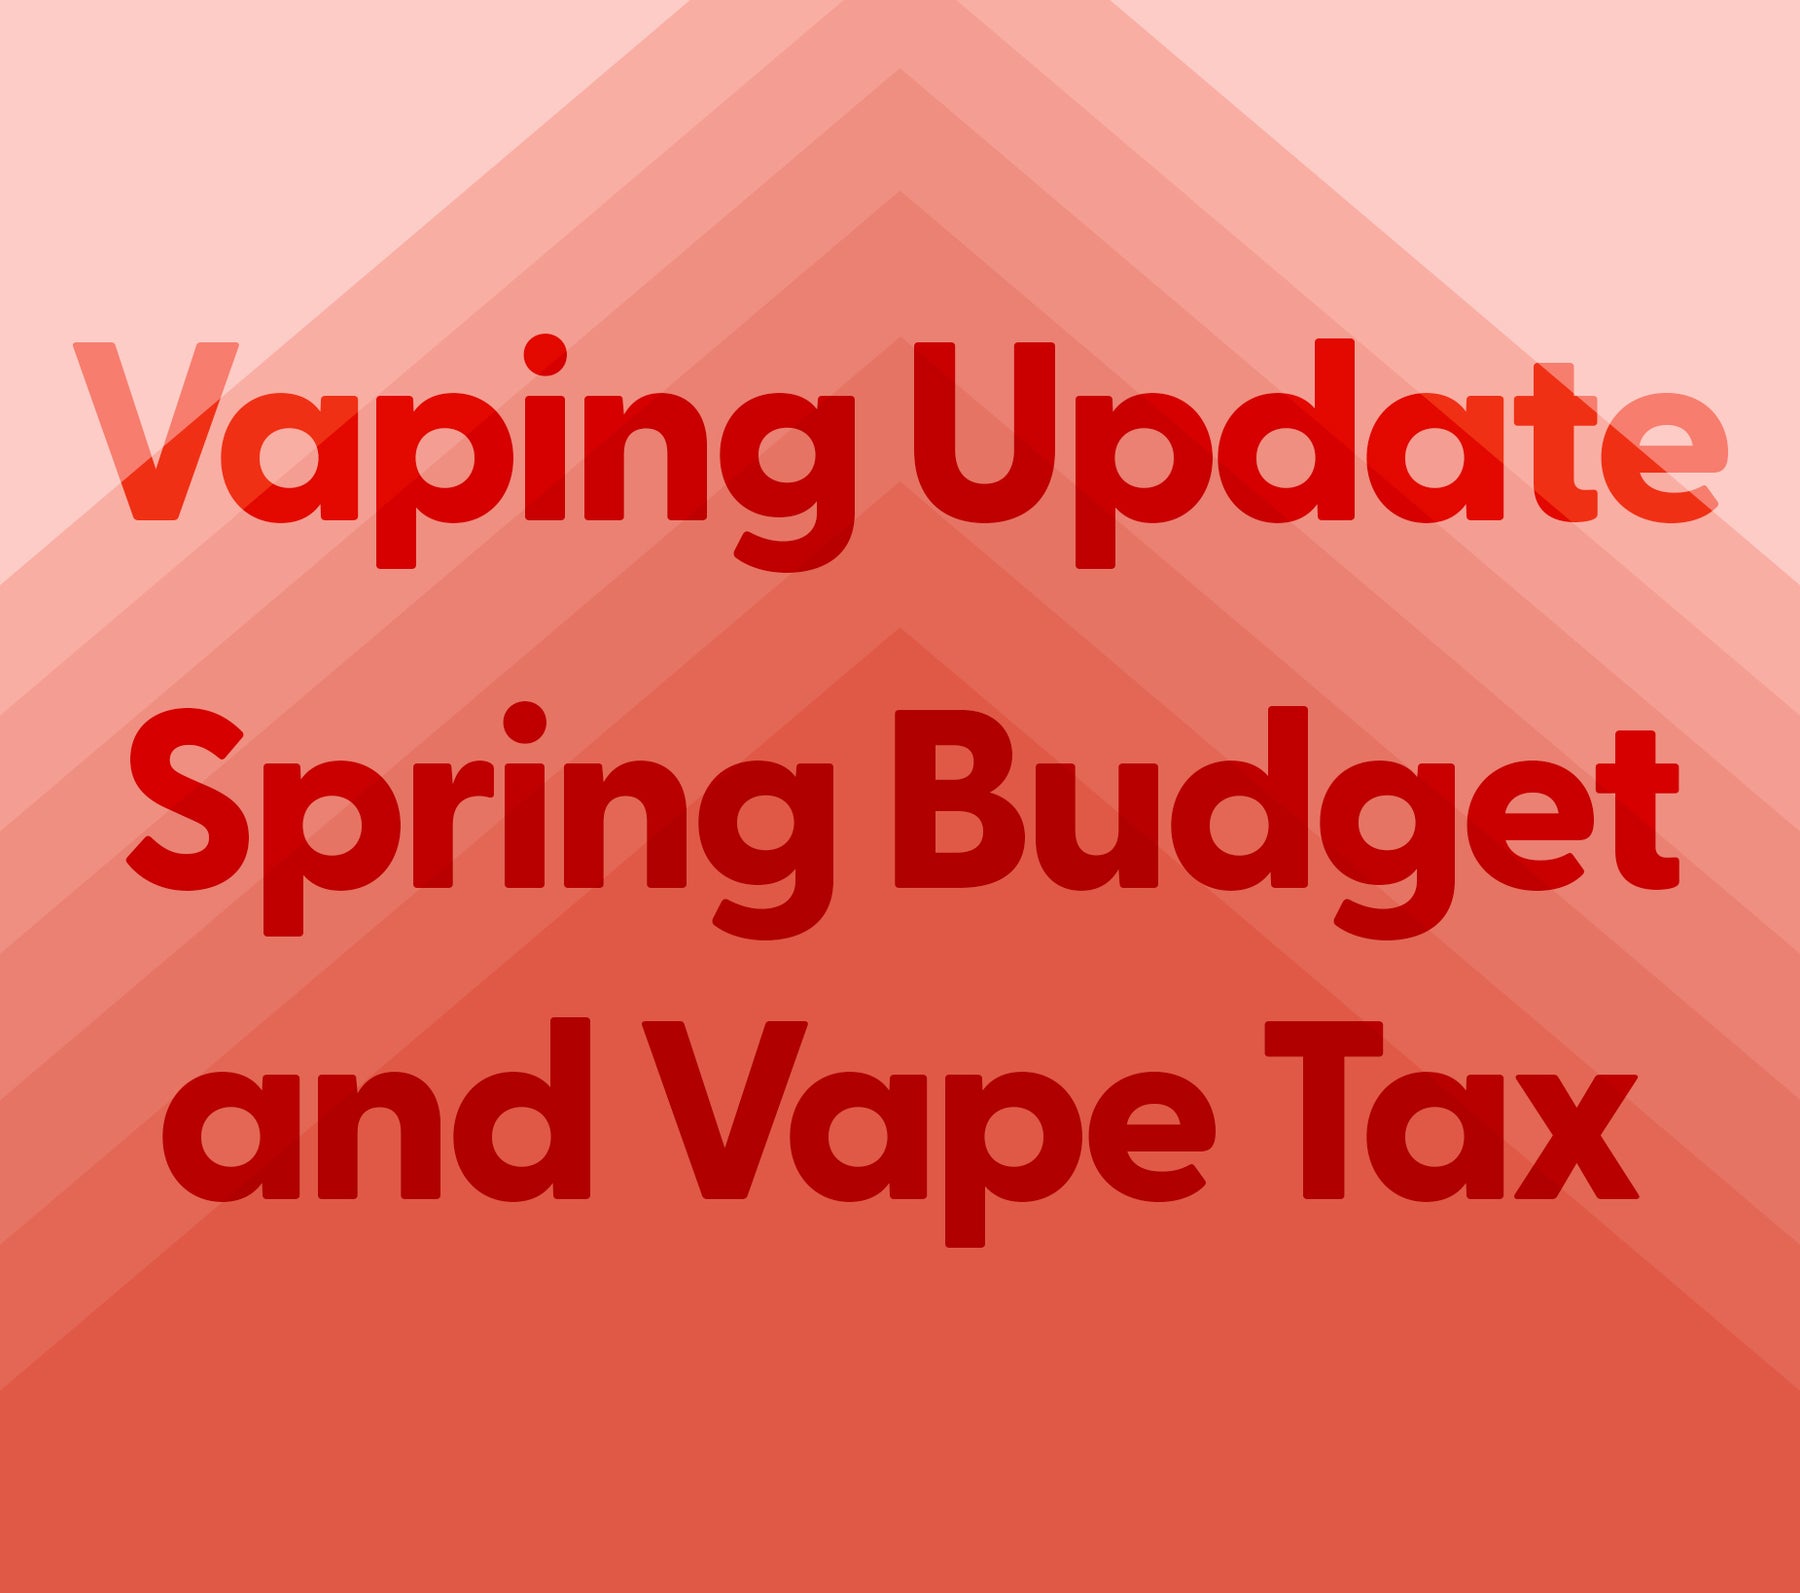 Vaping Update - Spring Budget